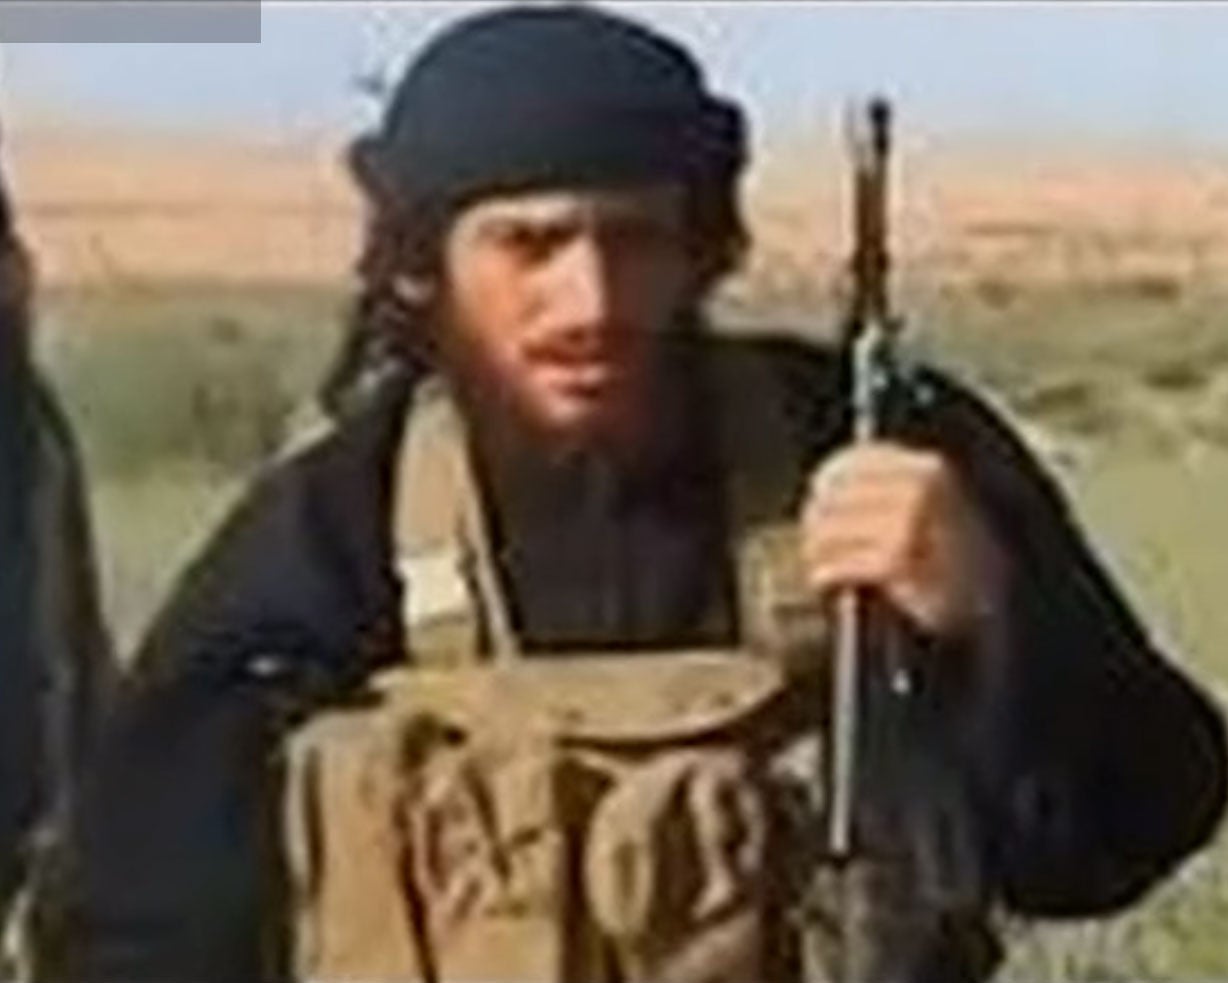 Chief spokesman of Isis, Abu Mohammed al-Adnani